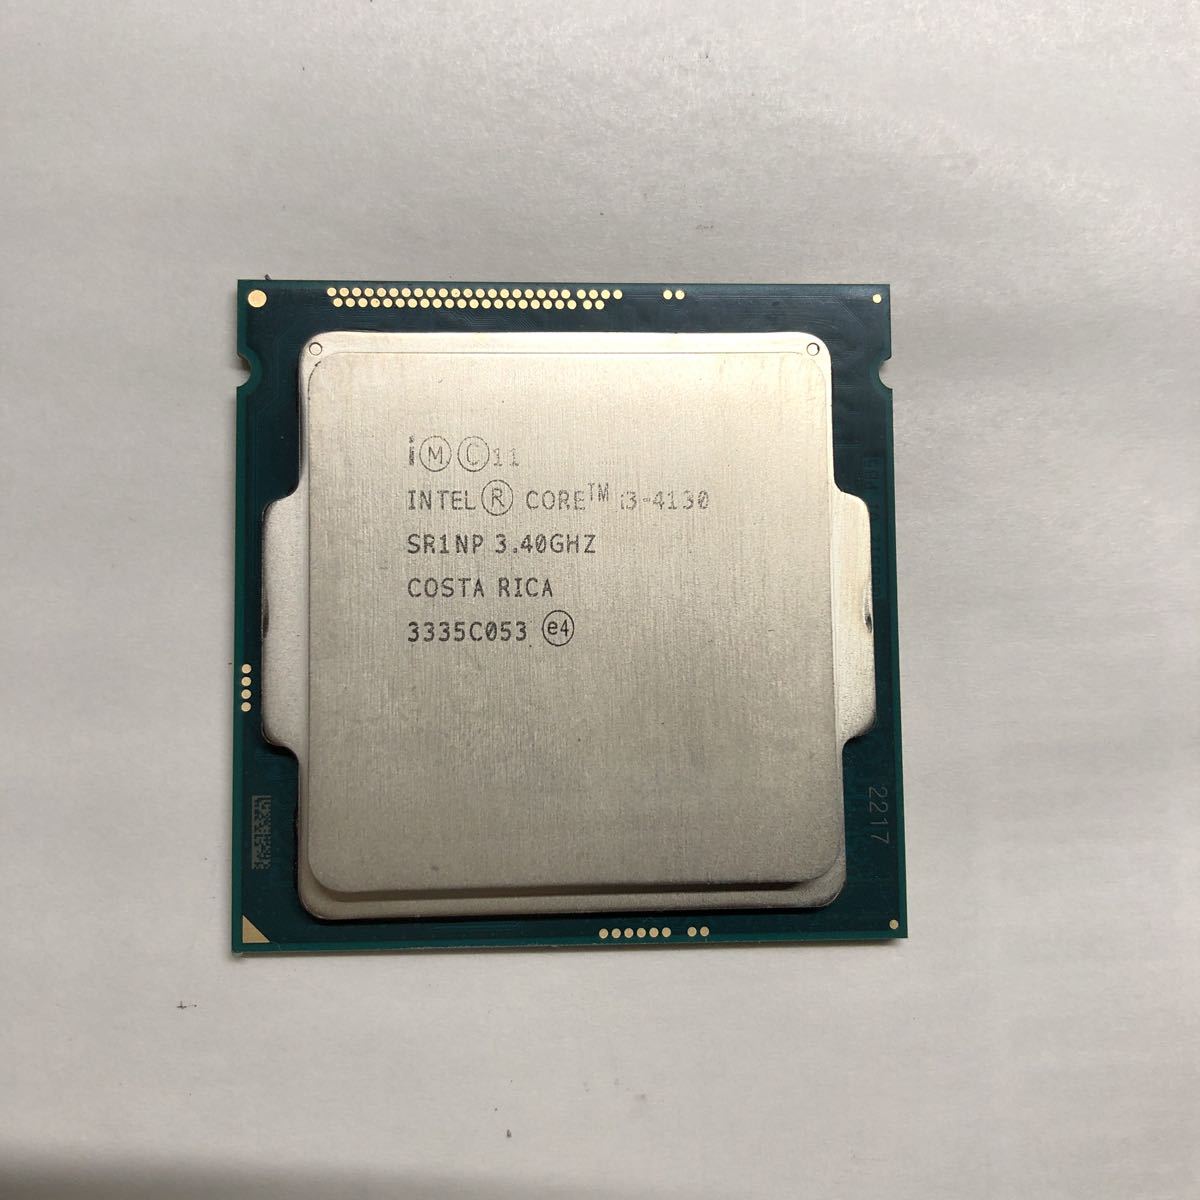 Intel Core i3-4130 3.40GHz SR1NP /p40_画像1